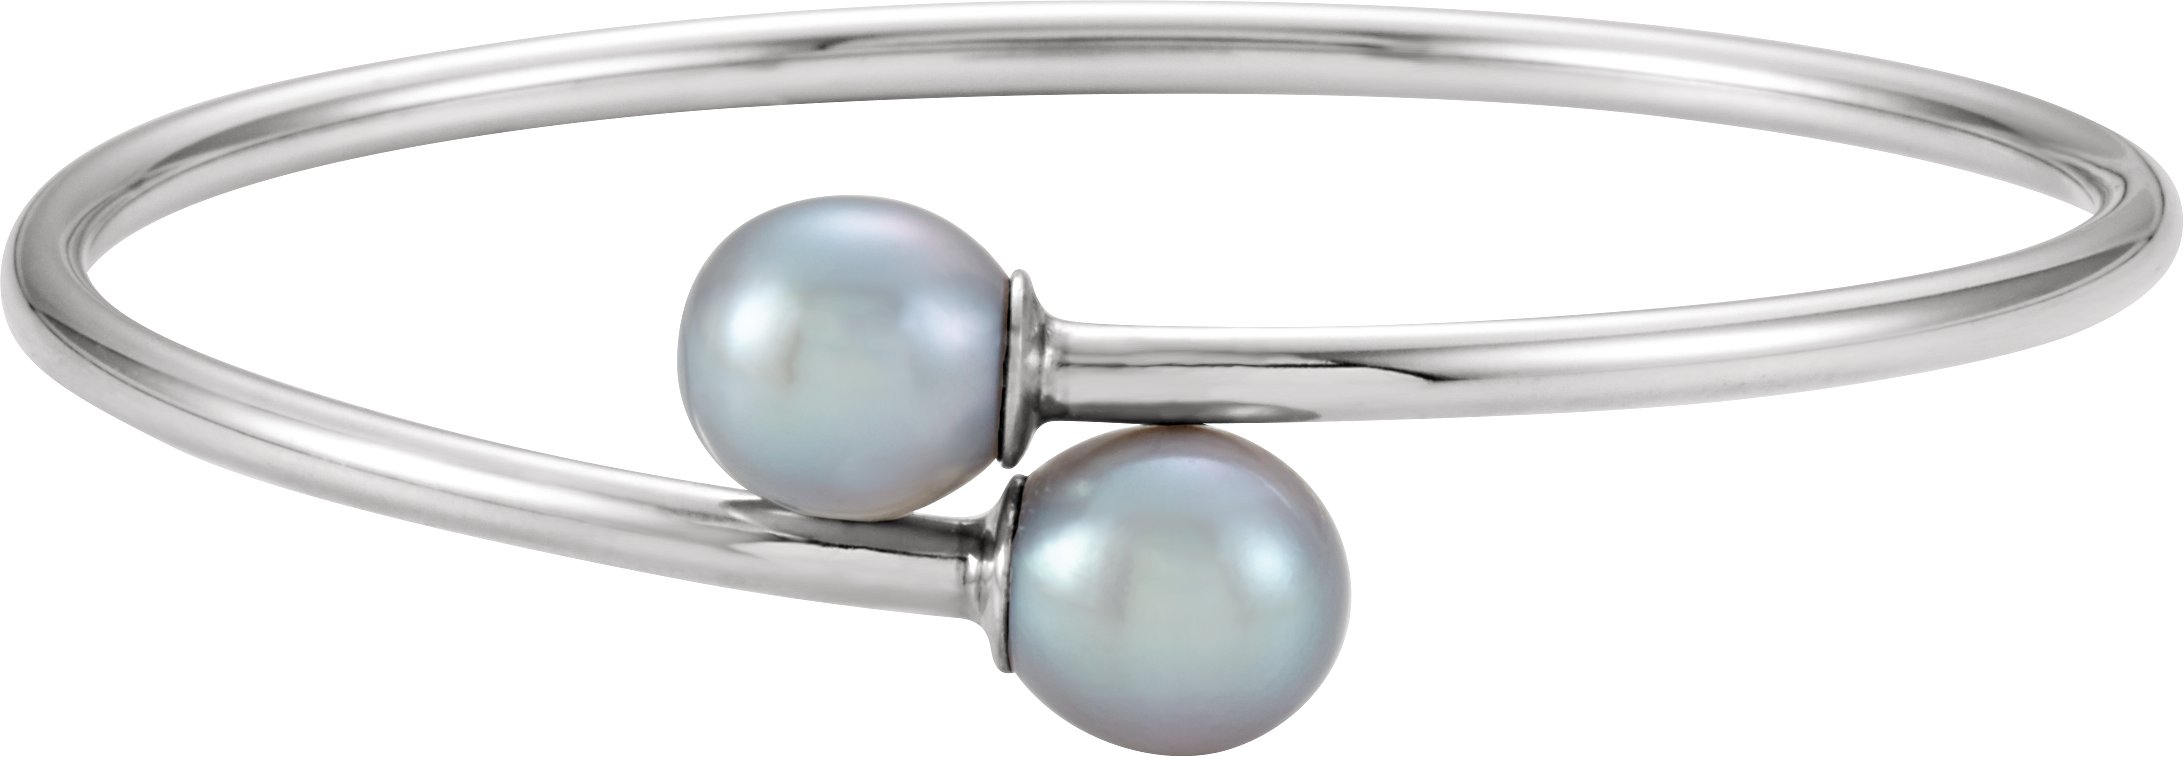 Sterling Silver 9.5 mm Gray Pearl Flexible Bangle Bracelet Ref. 9893971